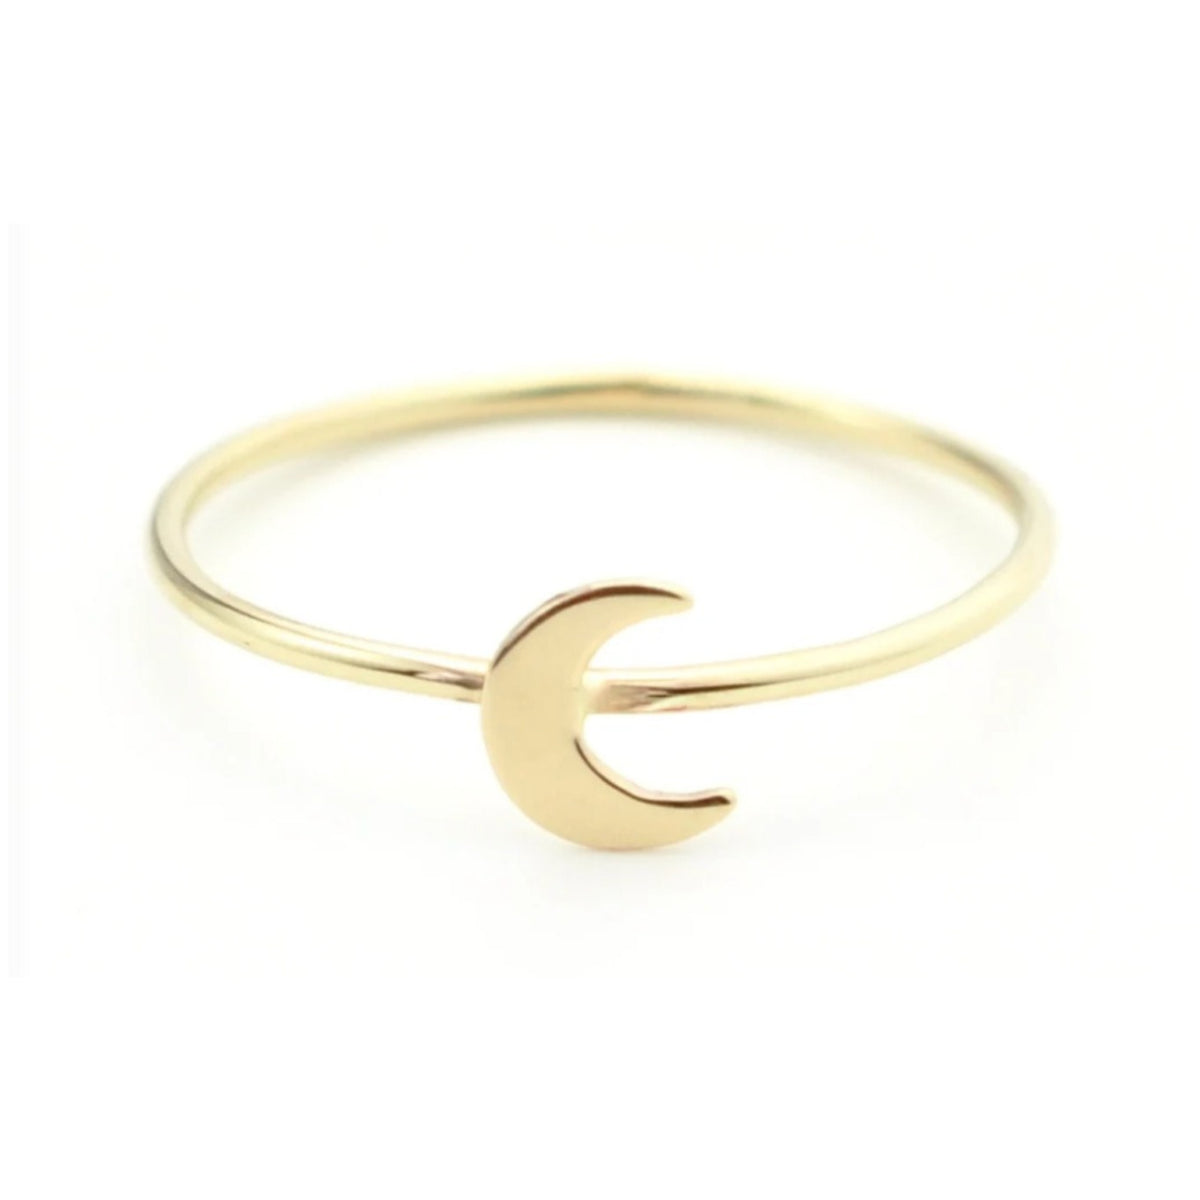 Crescent Moon Ring - 14k Gold Filled